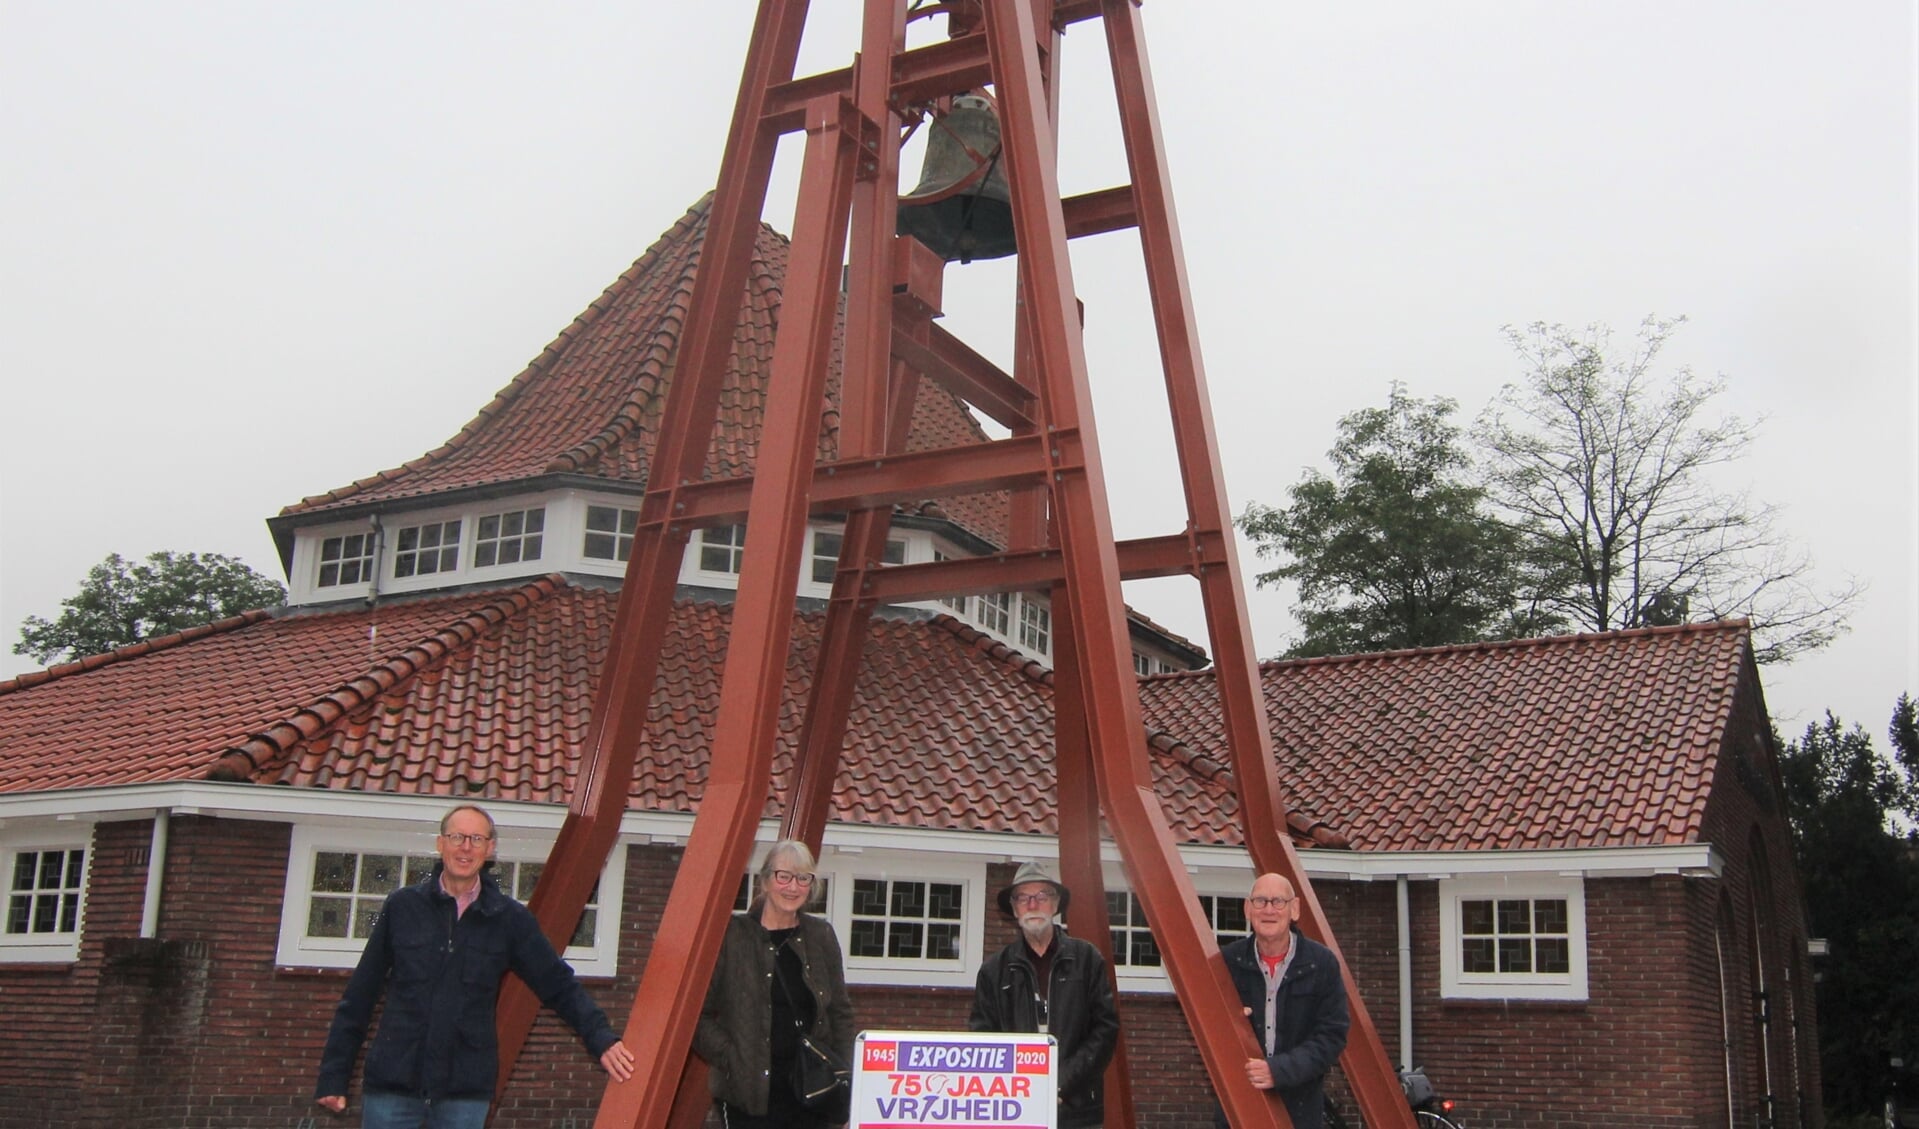 V.l.n.r. Piet Stammes (Centrumkerk), Ellen Drees, Donald Noorhoff en Marcel Jansen (allen Historische Kring).